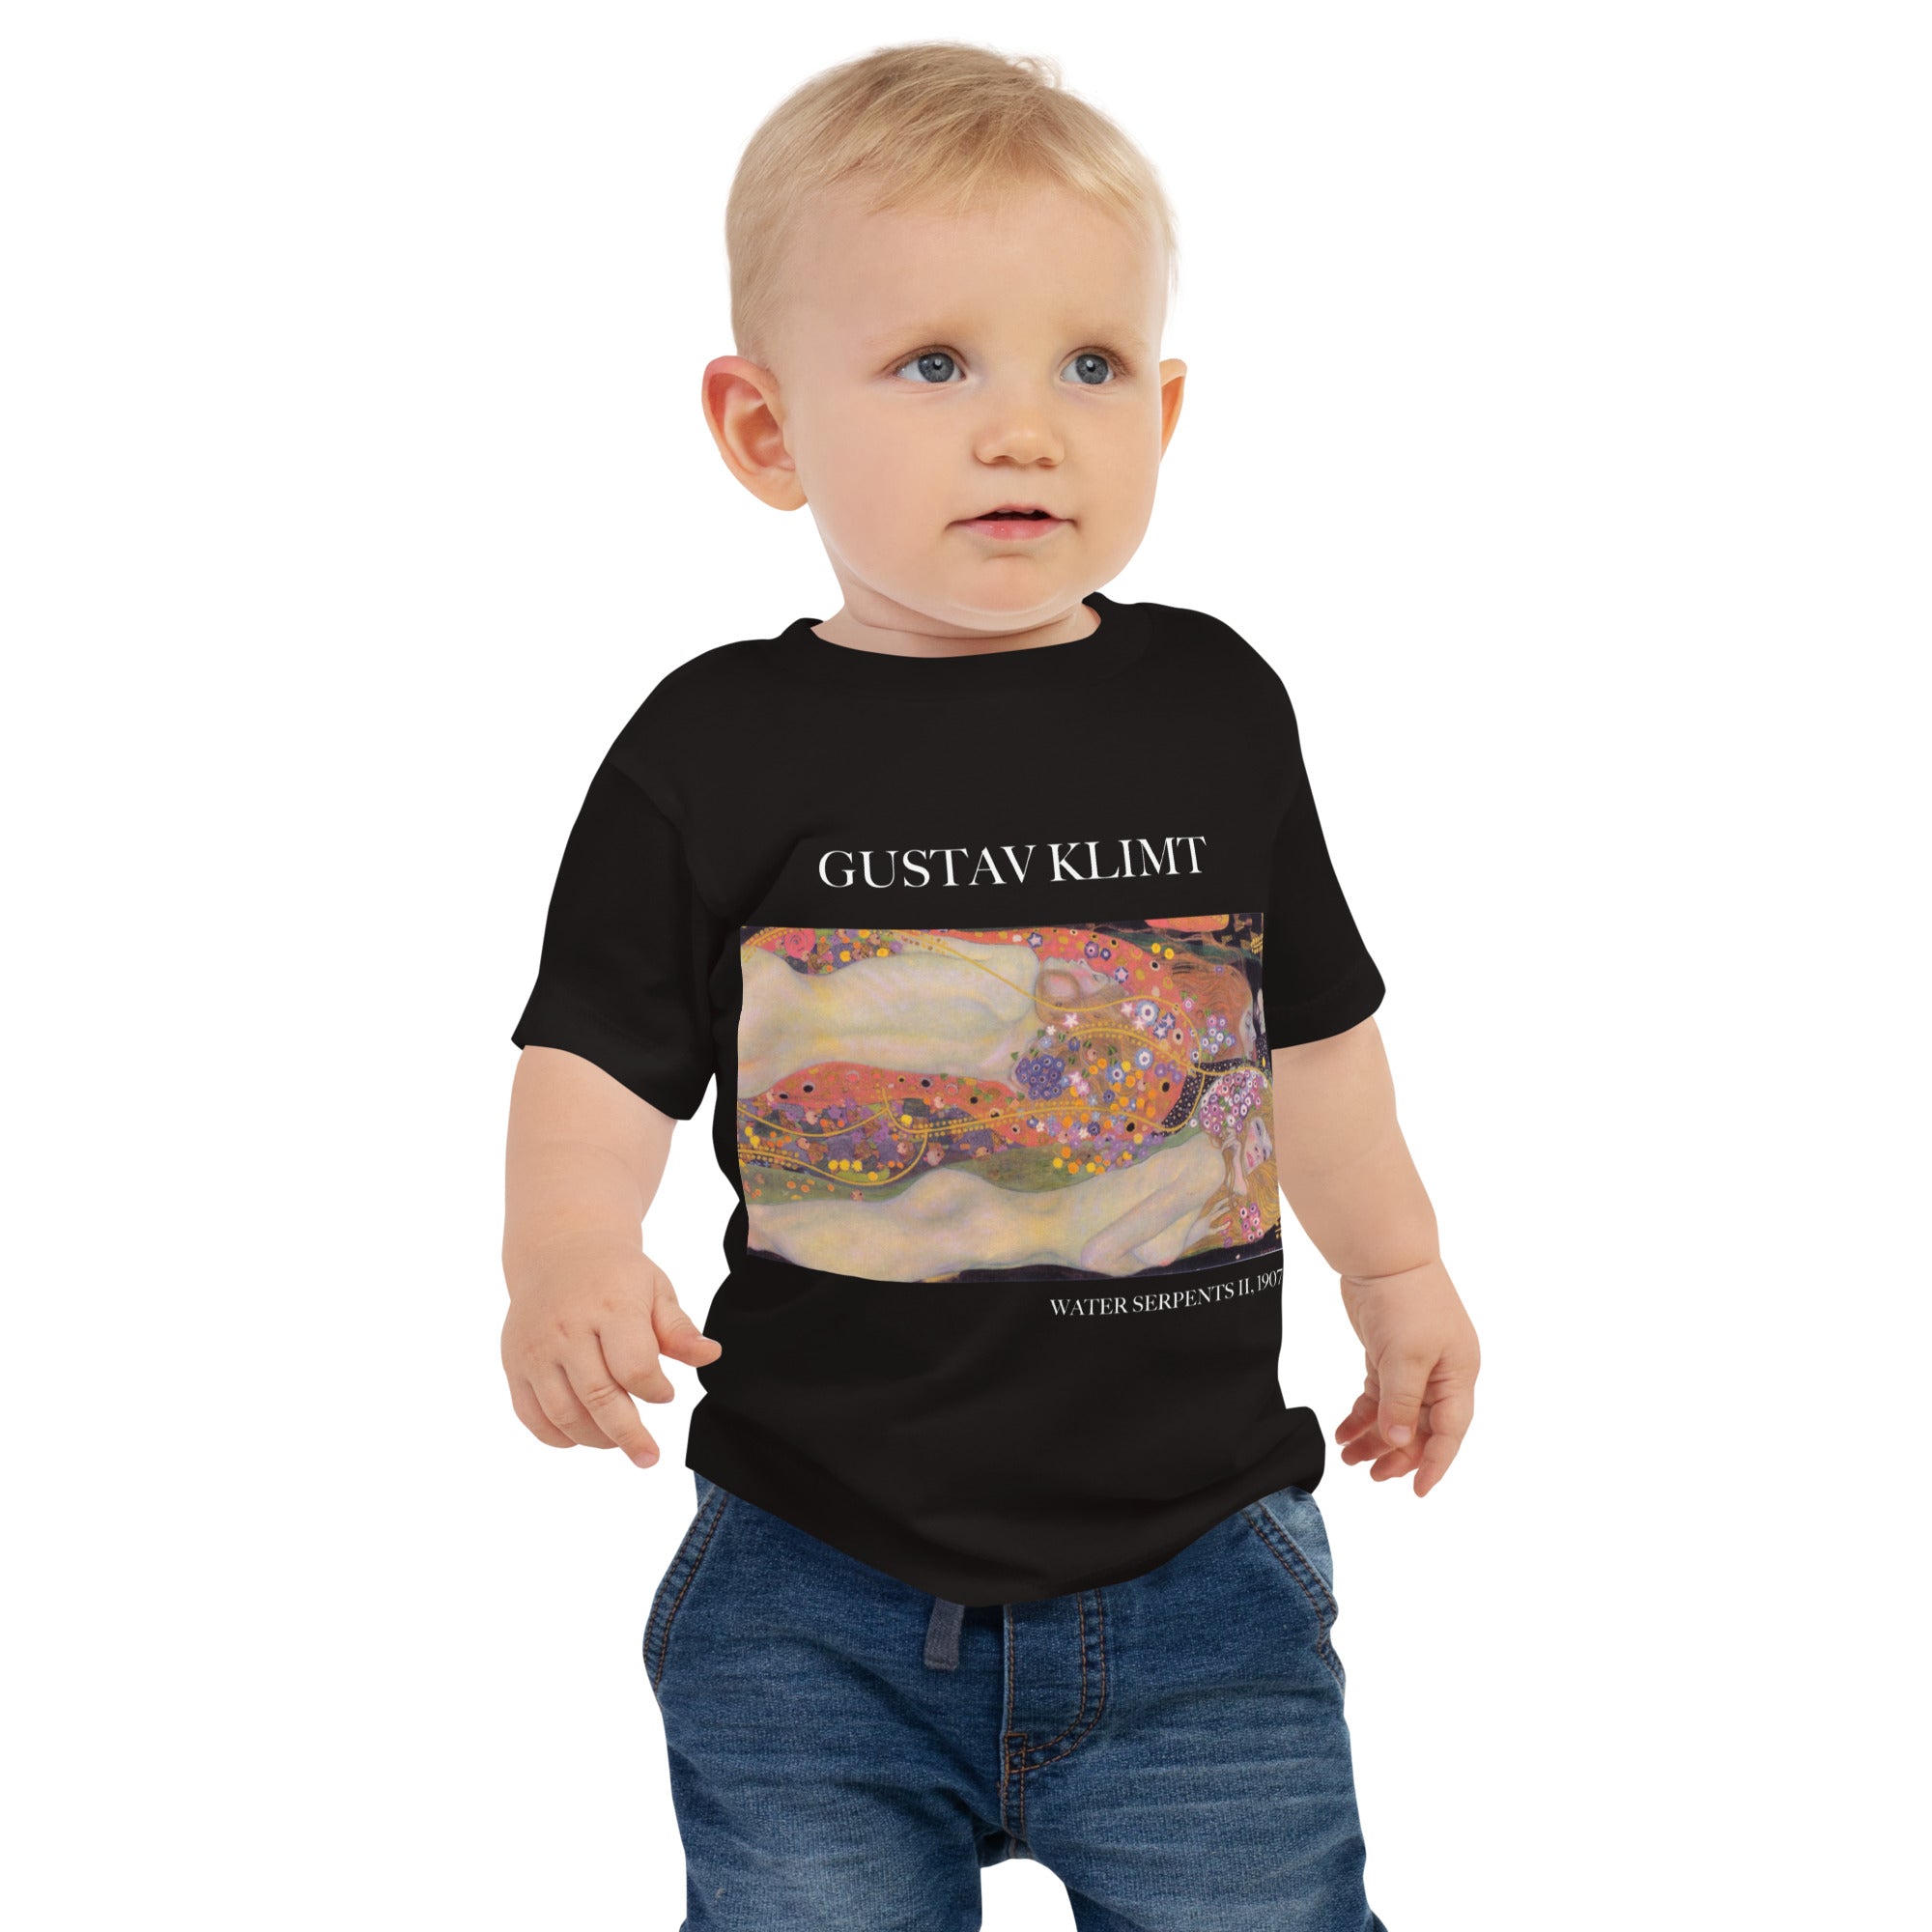 Gustav Klimt 'Water Serpents II' Famous Painting Baby Staple T-Shirt | Premium Baby Art Tee